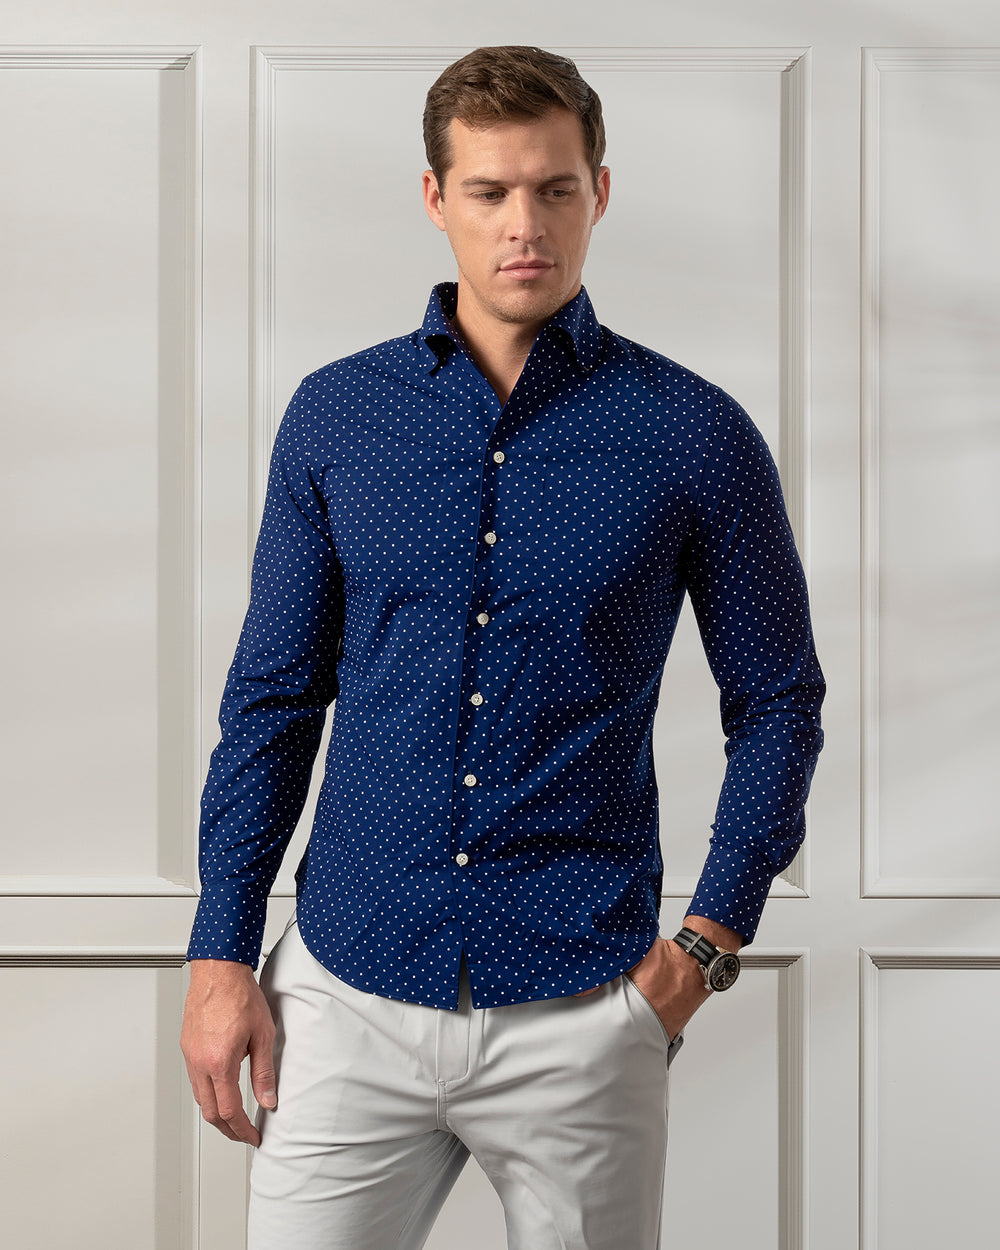 ESQ | The Bamboo Shirt & Bespoke Menswear